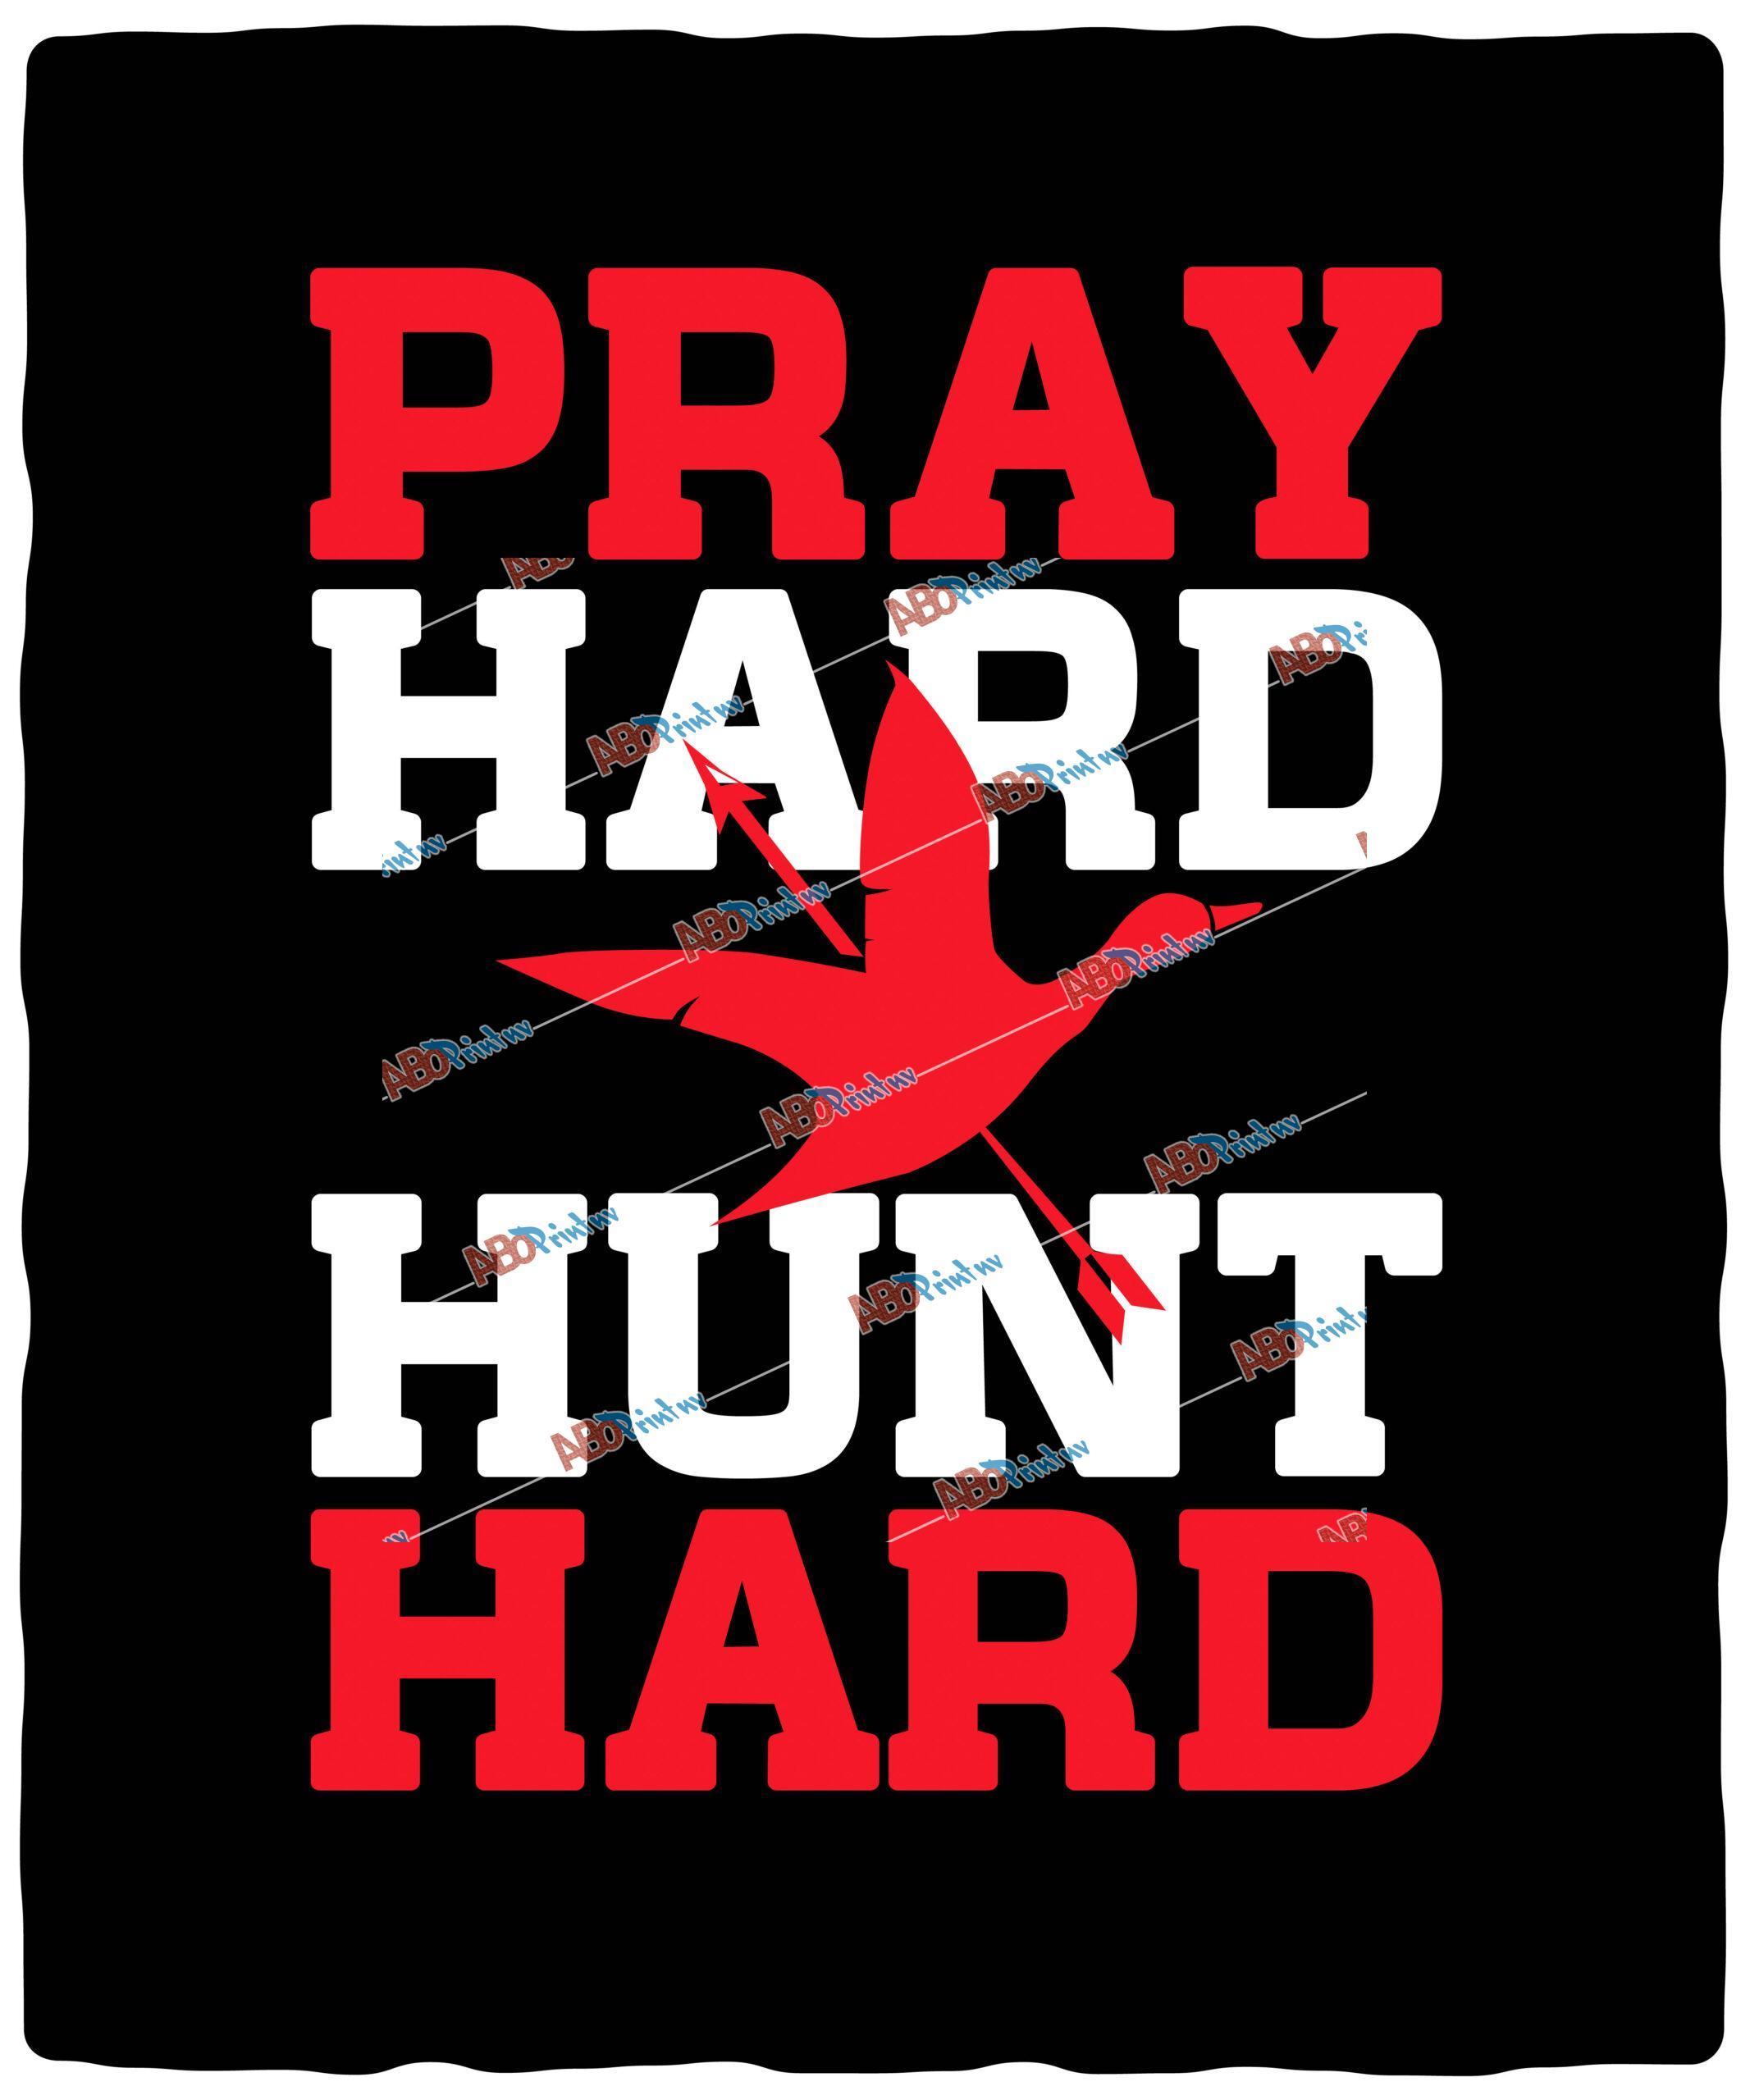 pray hard hunt hard